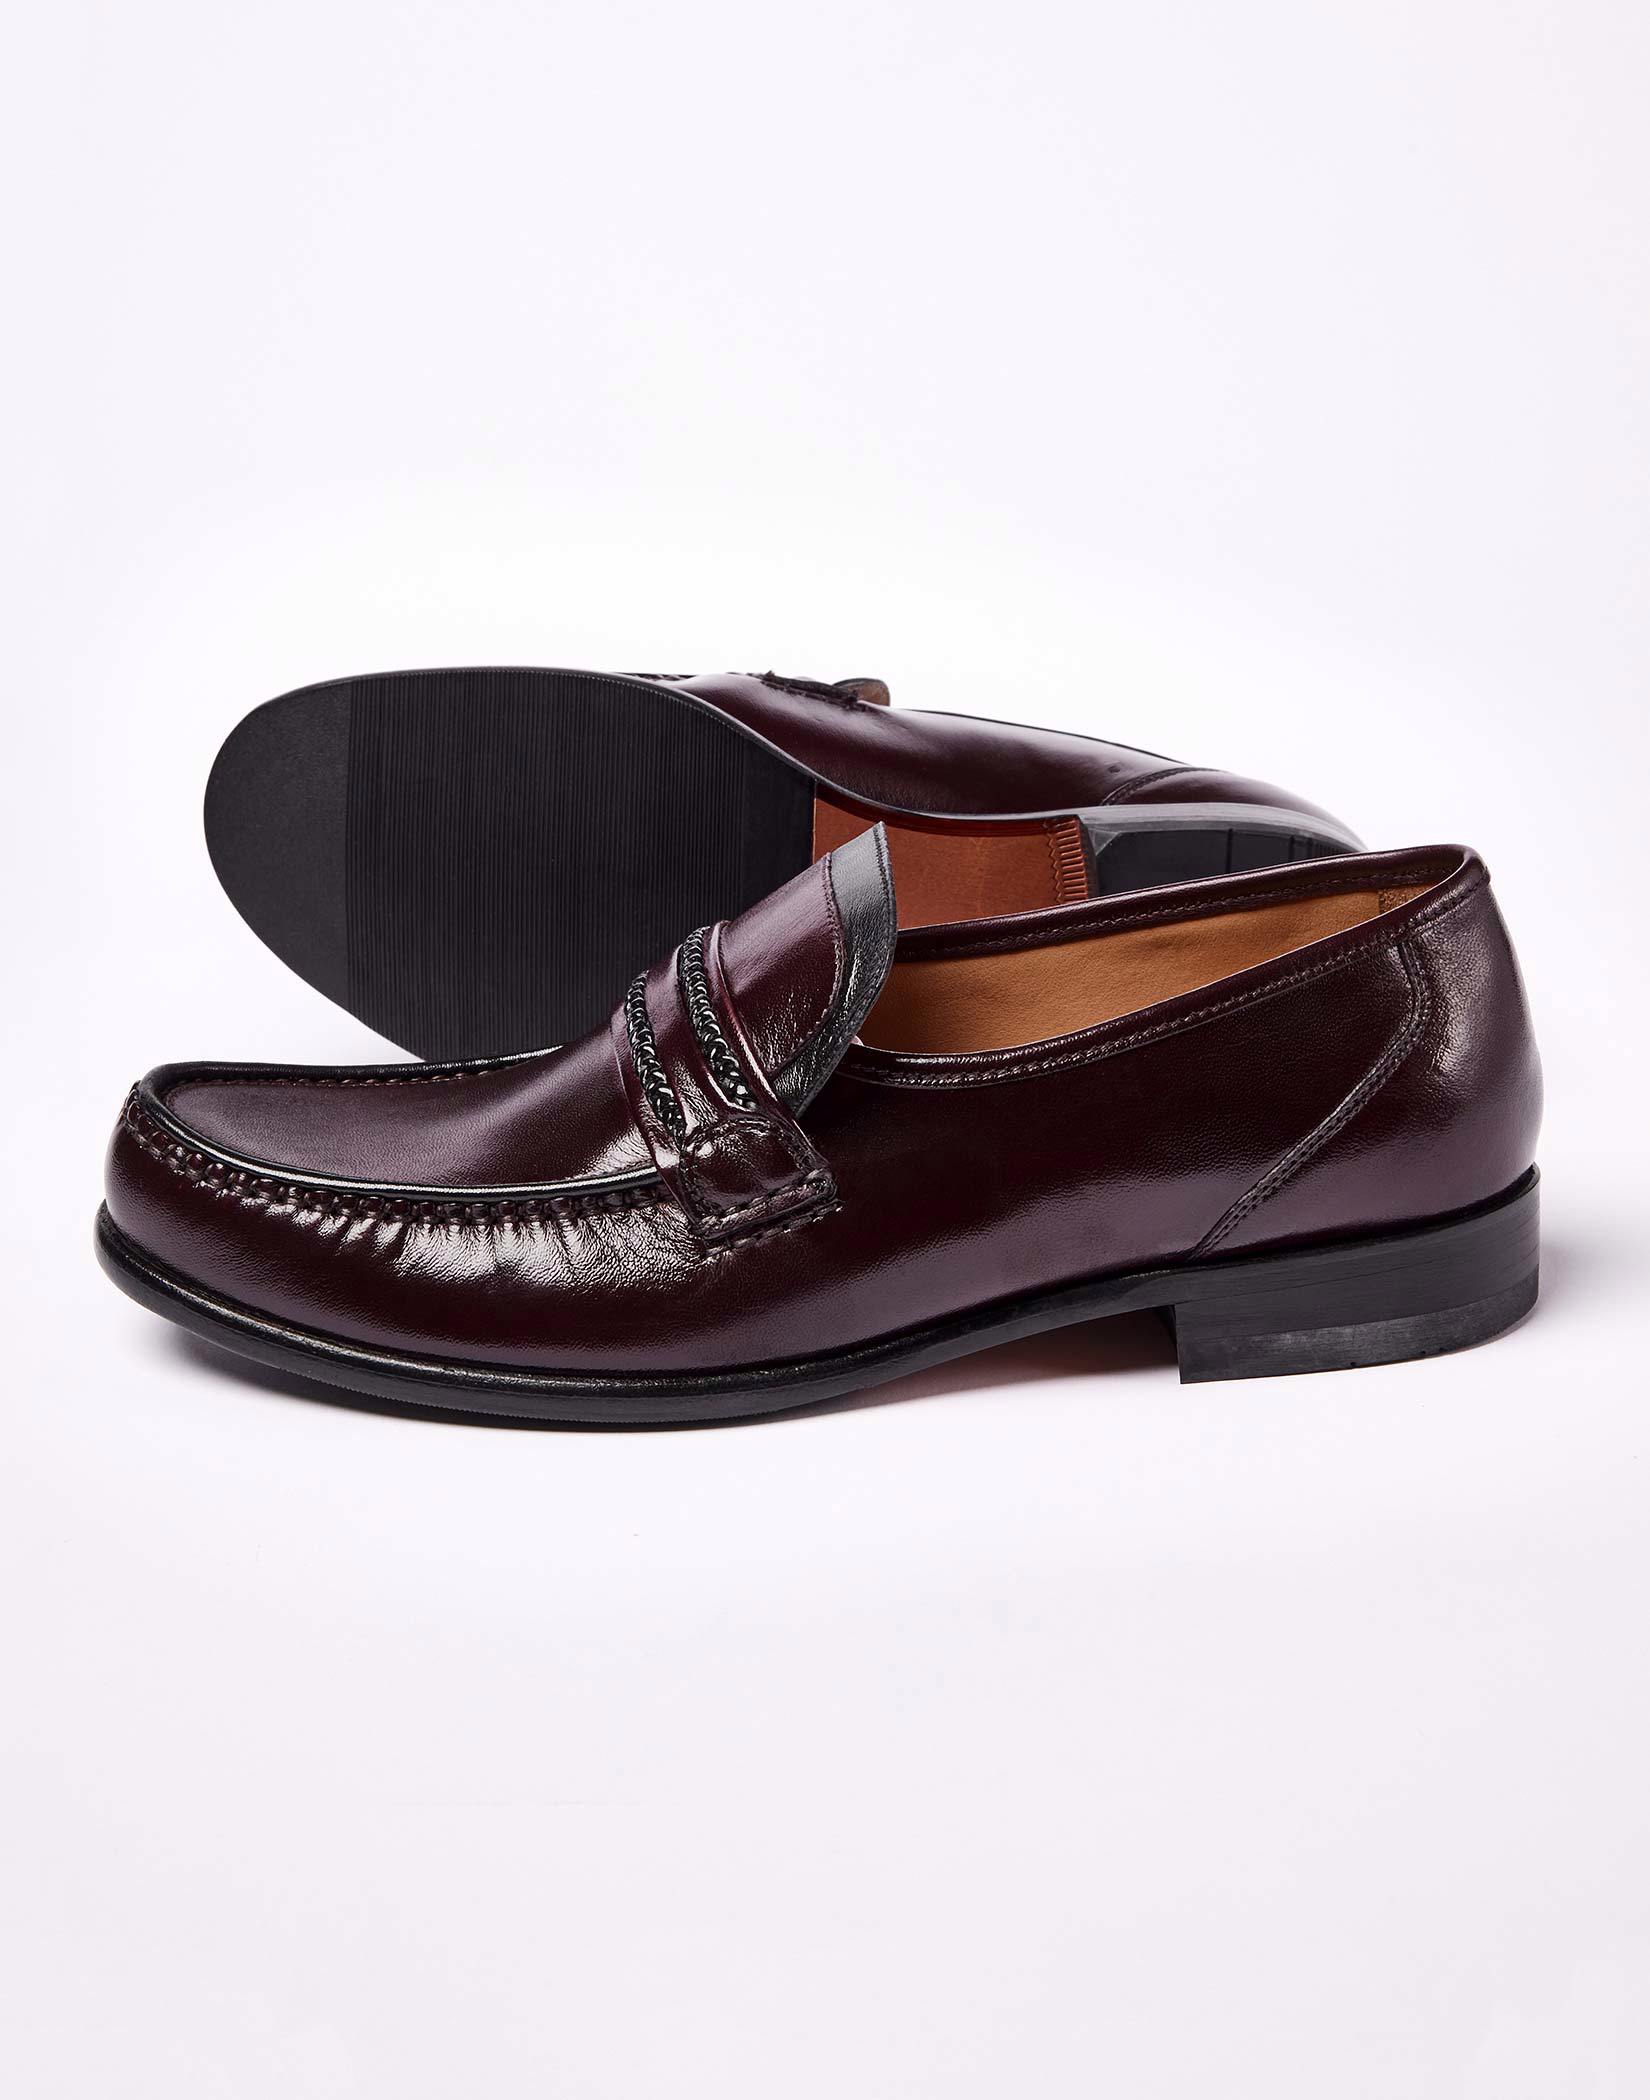 Men's Loafers Moccasin Shoes | Joseph Turner